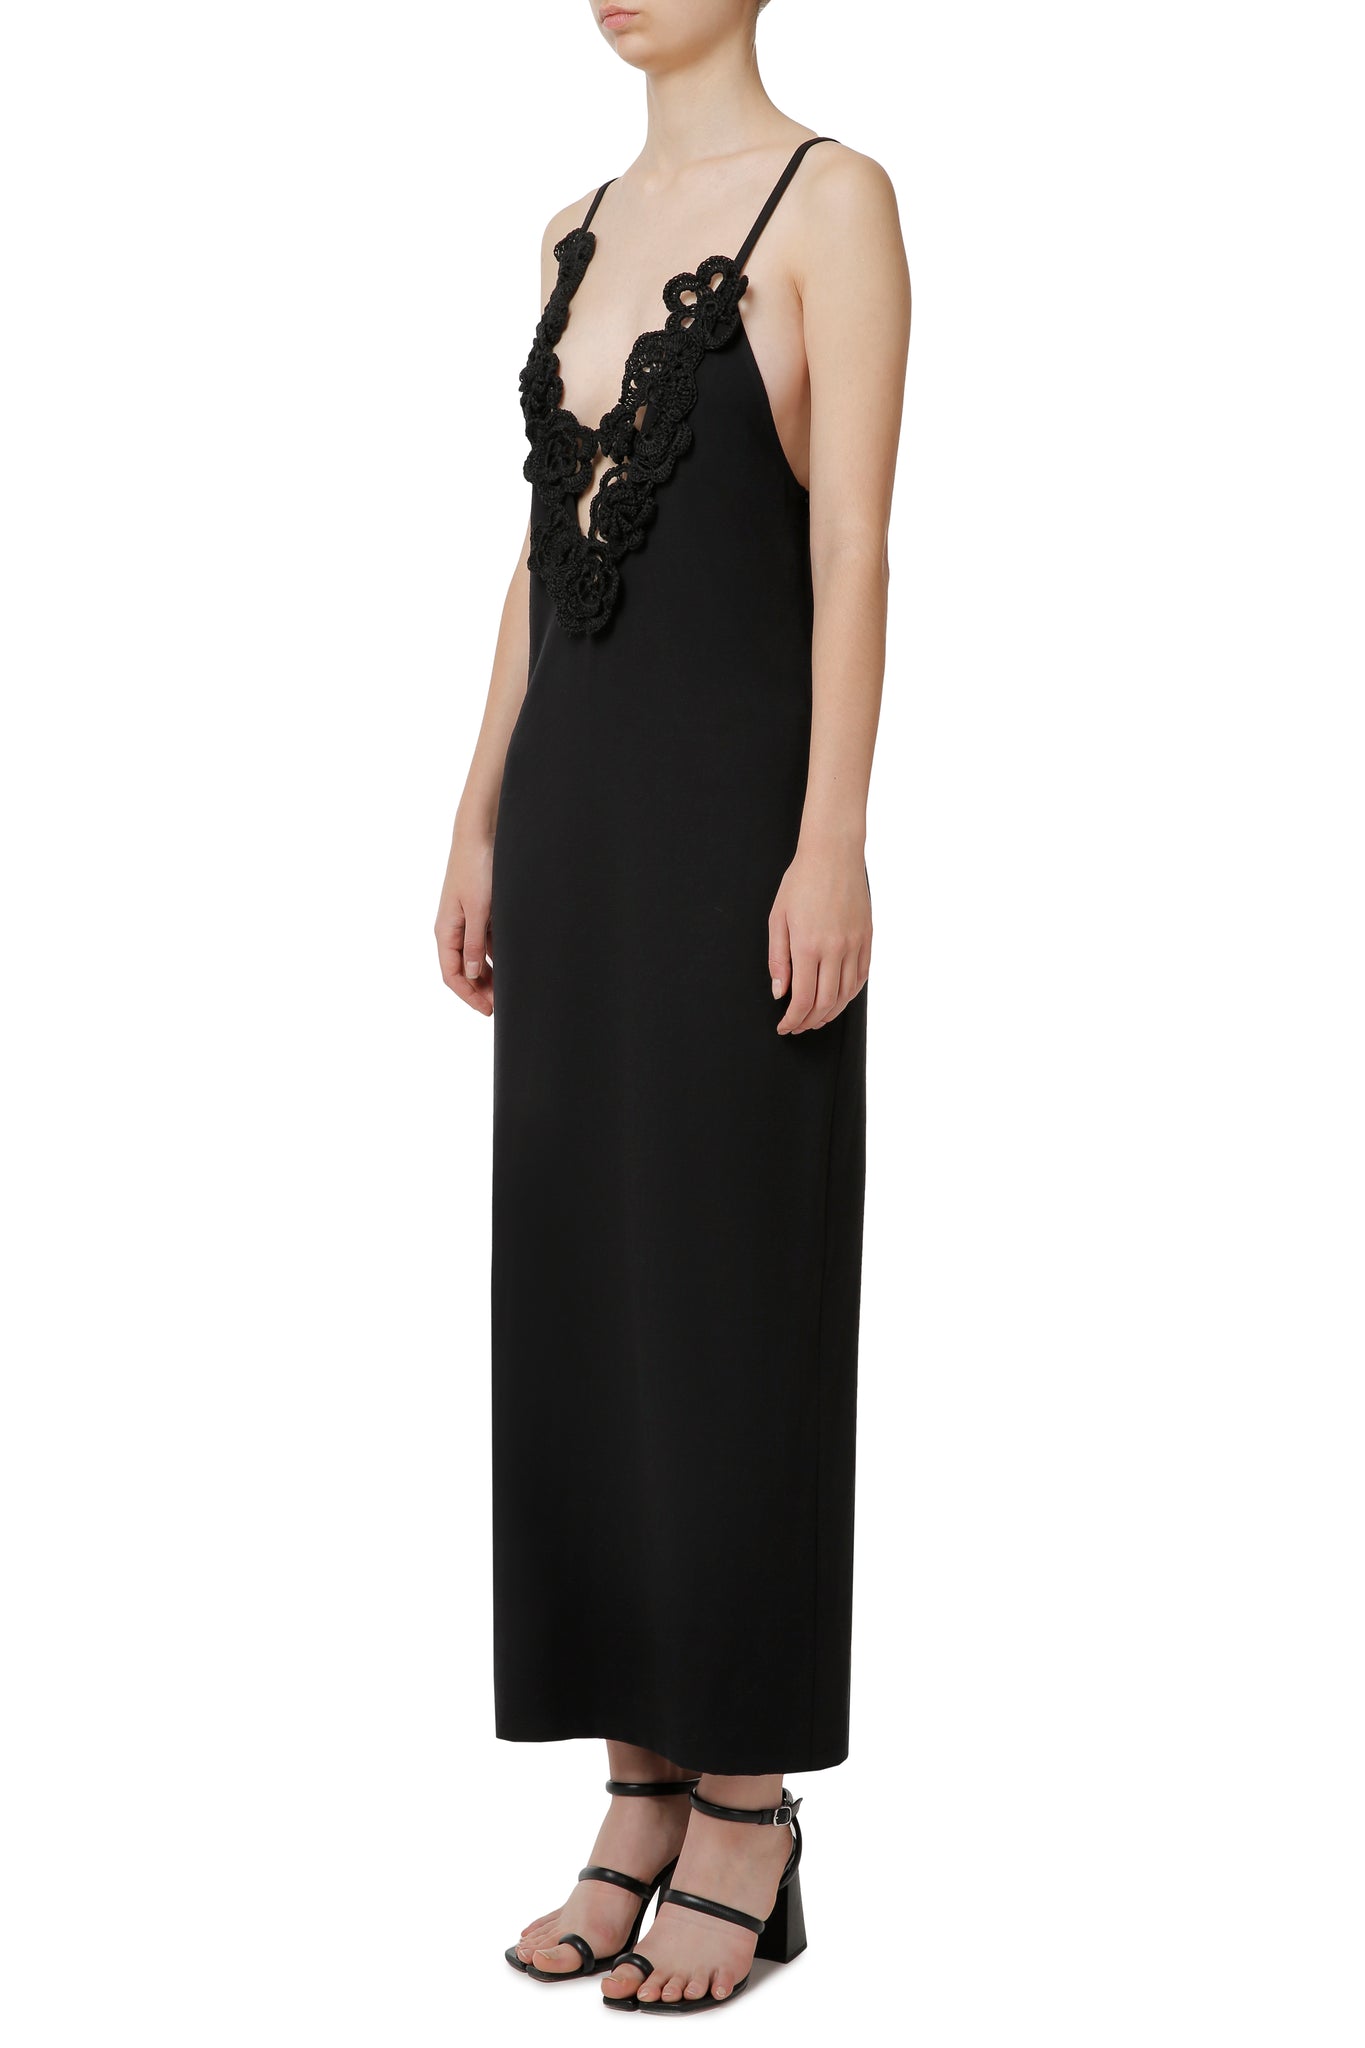 Black slip-dress with hand-knit details